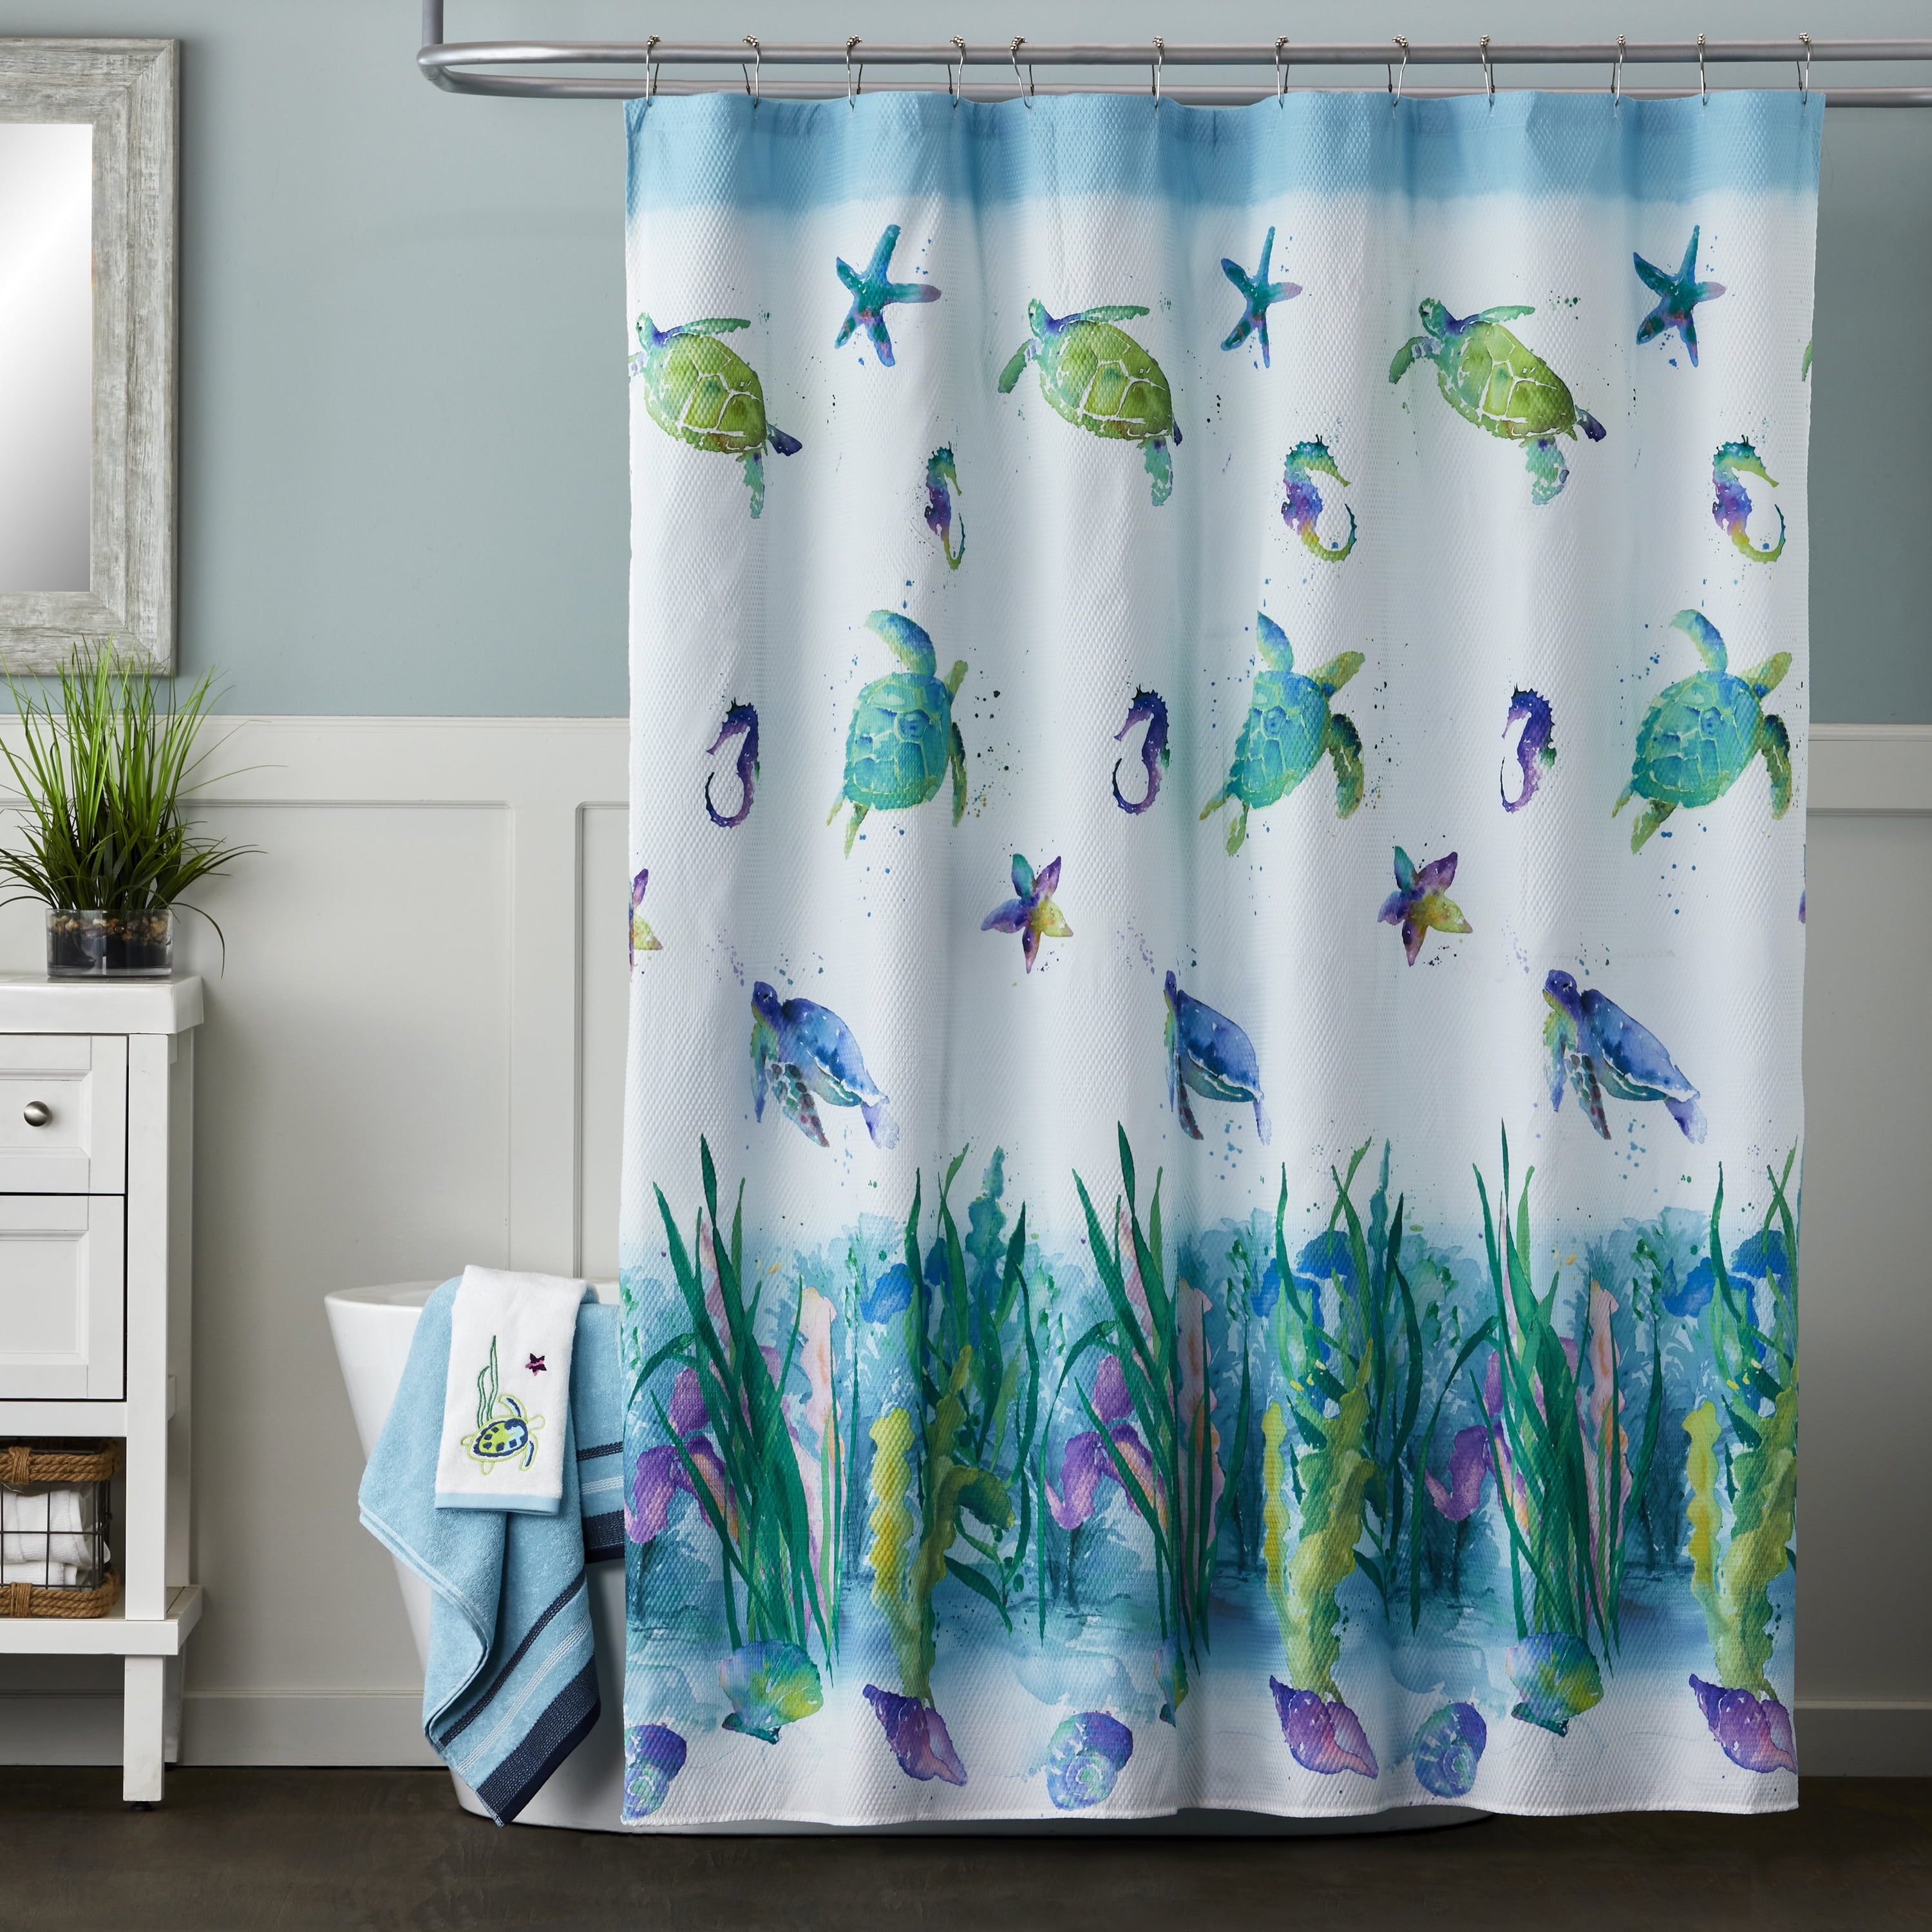 Colorful Watercolor Ink Pattern Bathroom Waterproof Fabric Shower Curtain Liner 